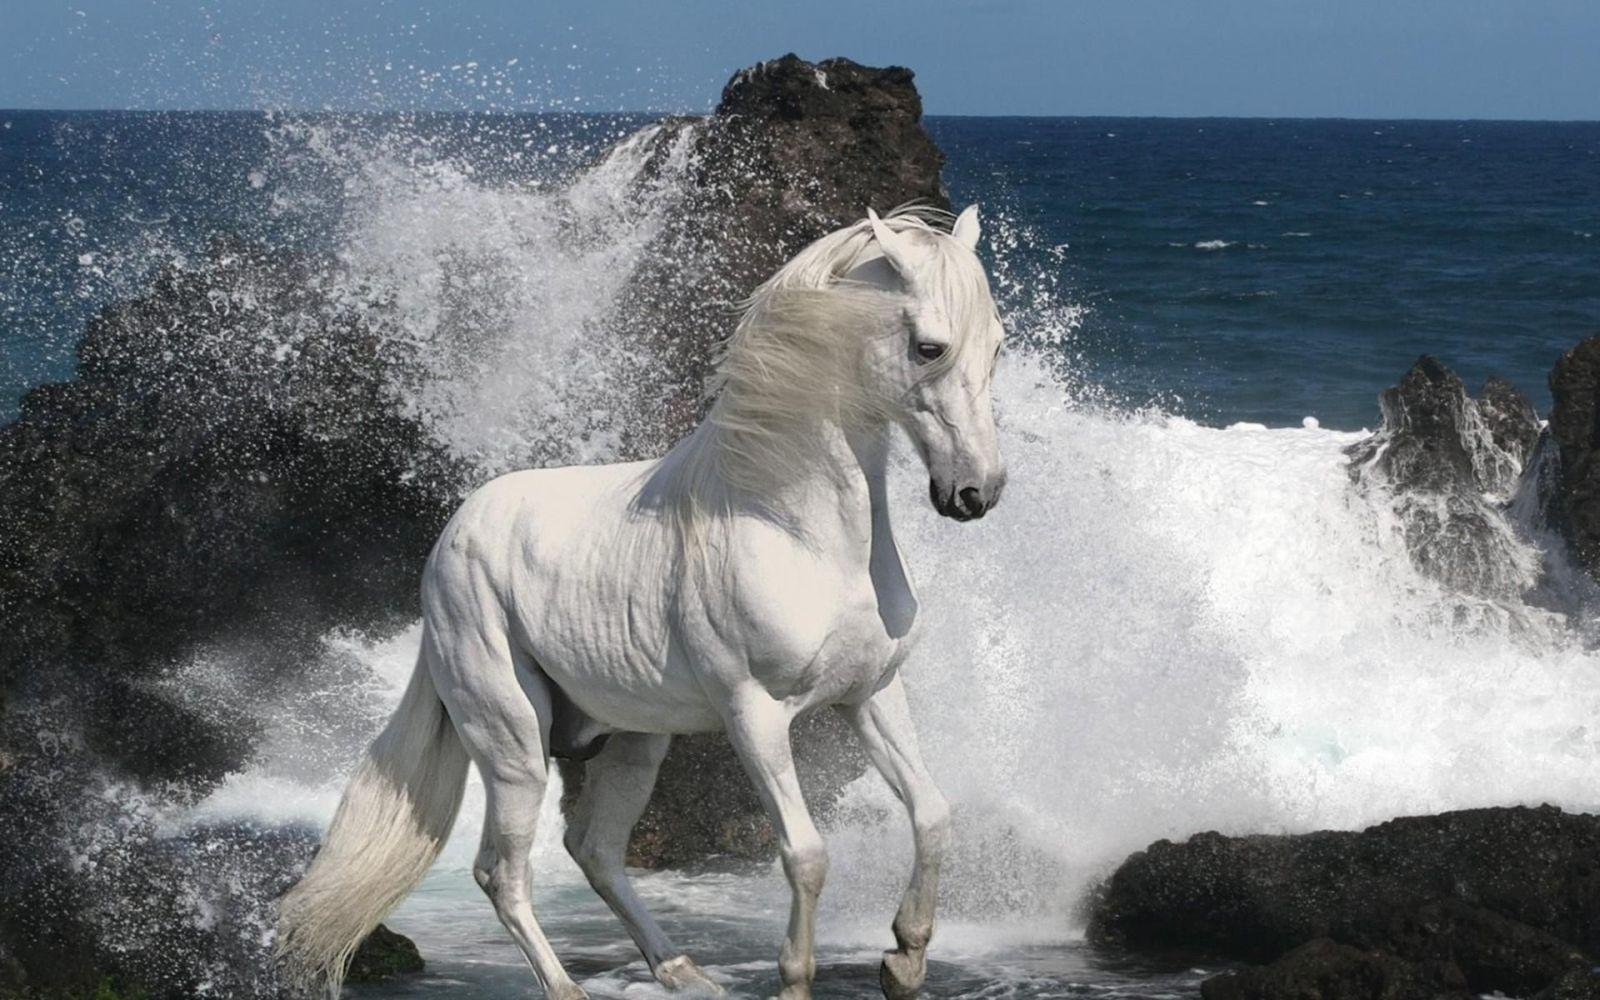 Beautiful Arabian Horse HD Wallpaper for Desktop